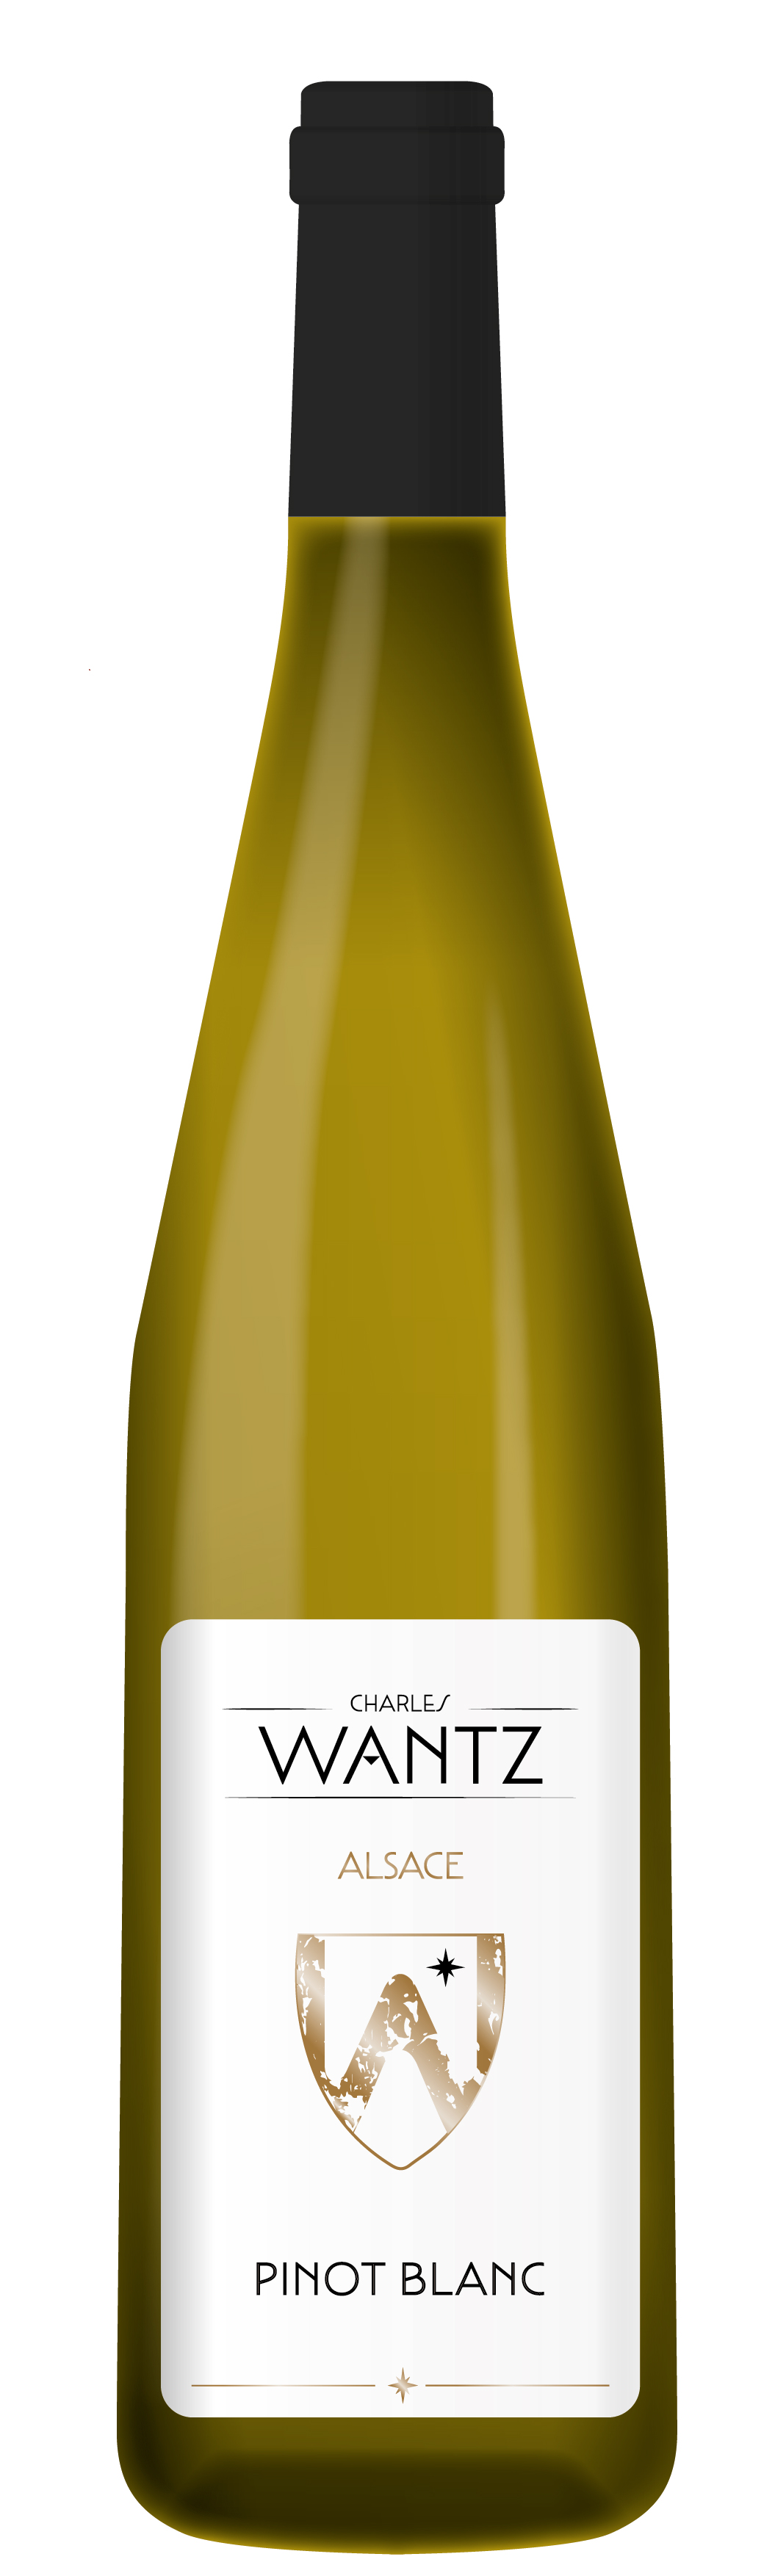 Pinot blanc 2020